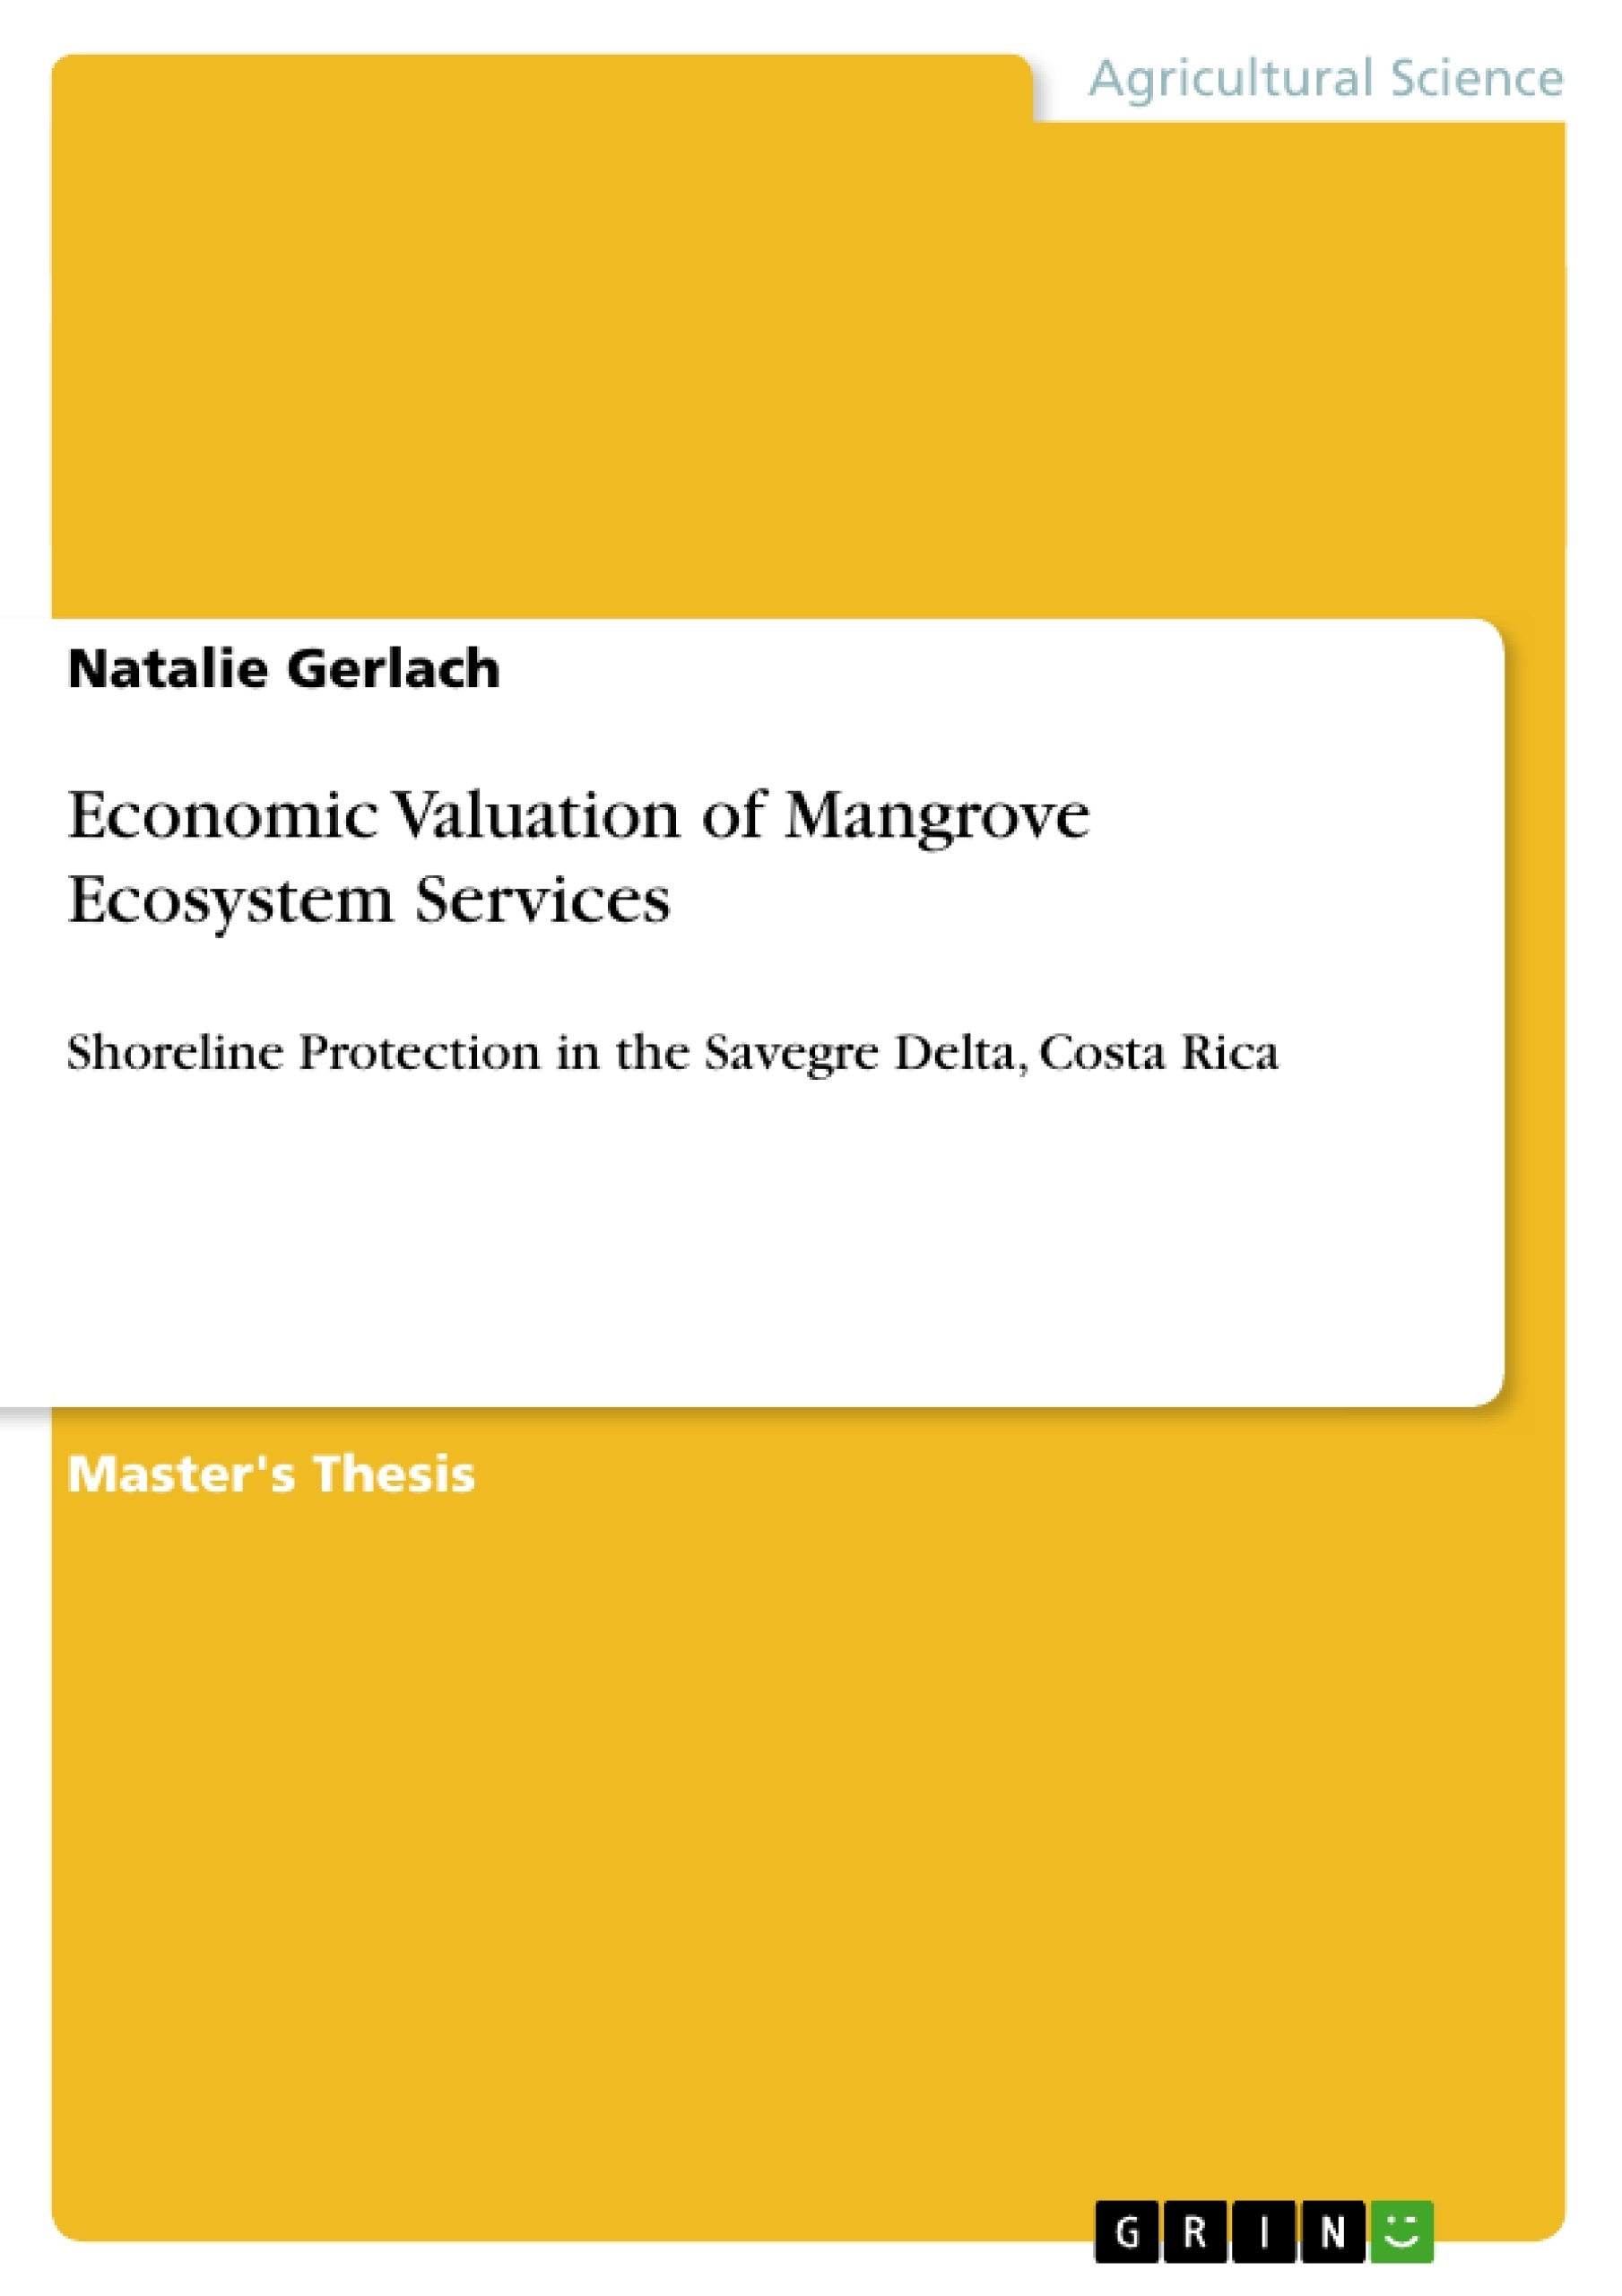 Title: Economic Valuation of Mangrove Ecosystem Services